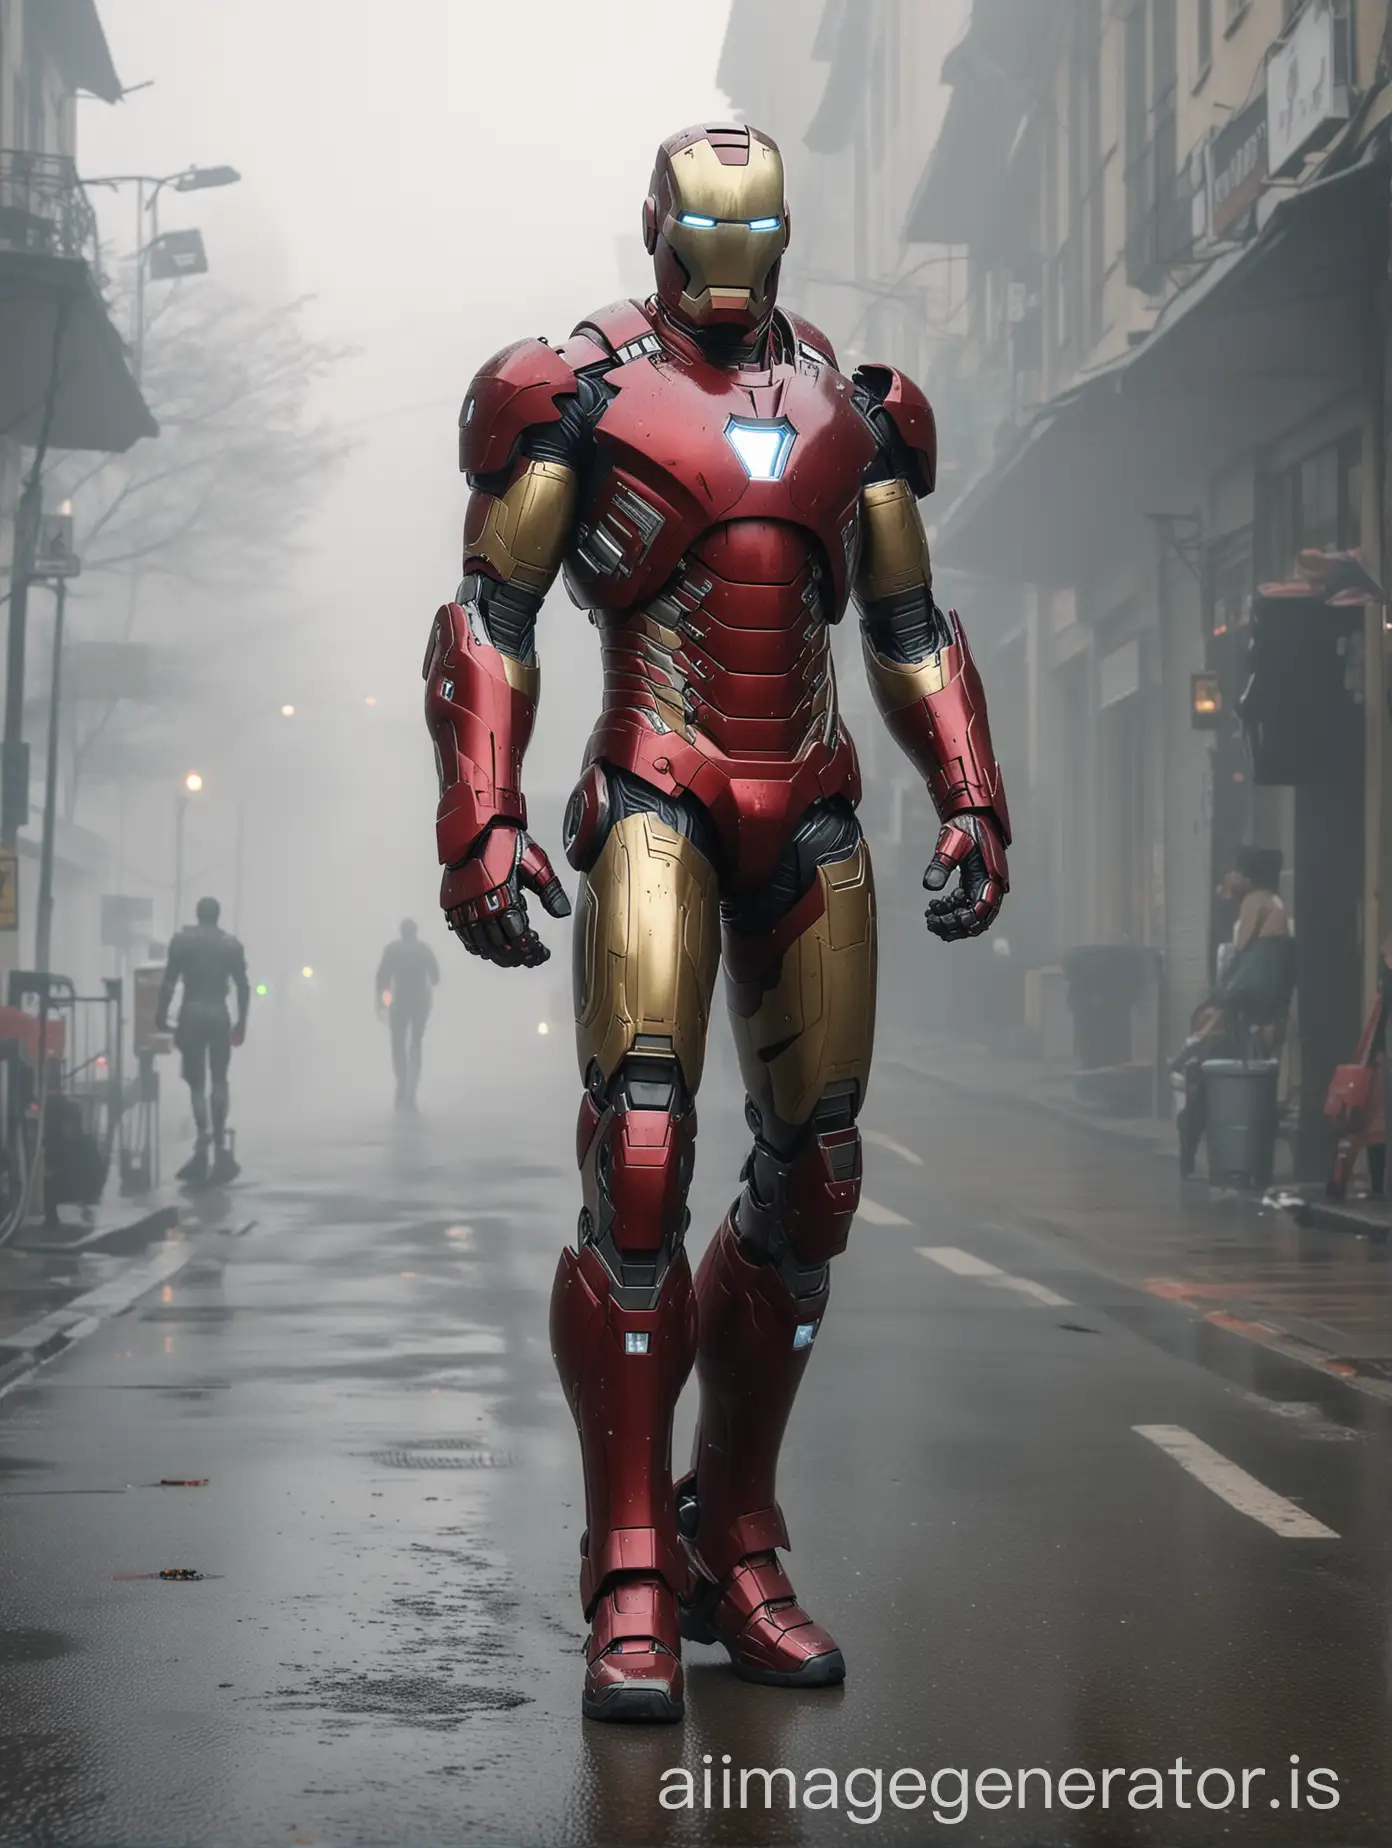 Ironman-Suit-Portrait-Intense-Hero-in-HighResolution-Foggy-Street